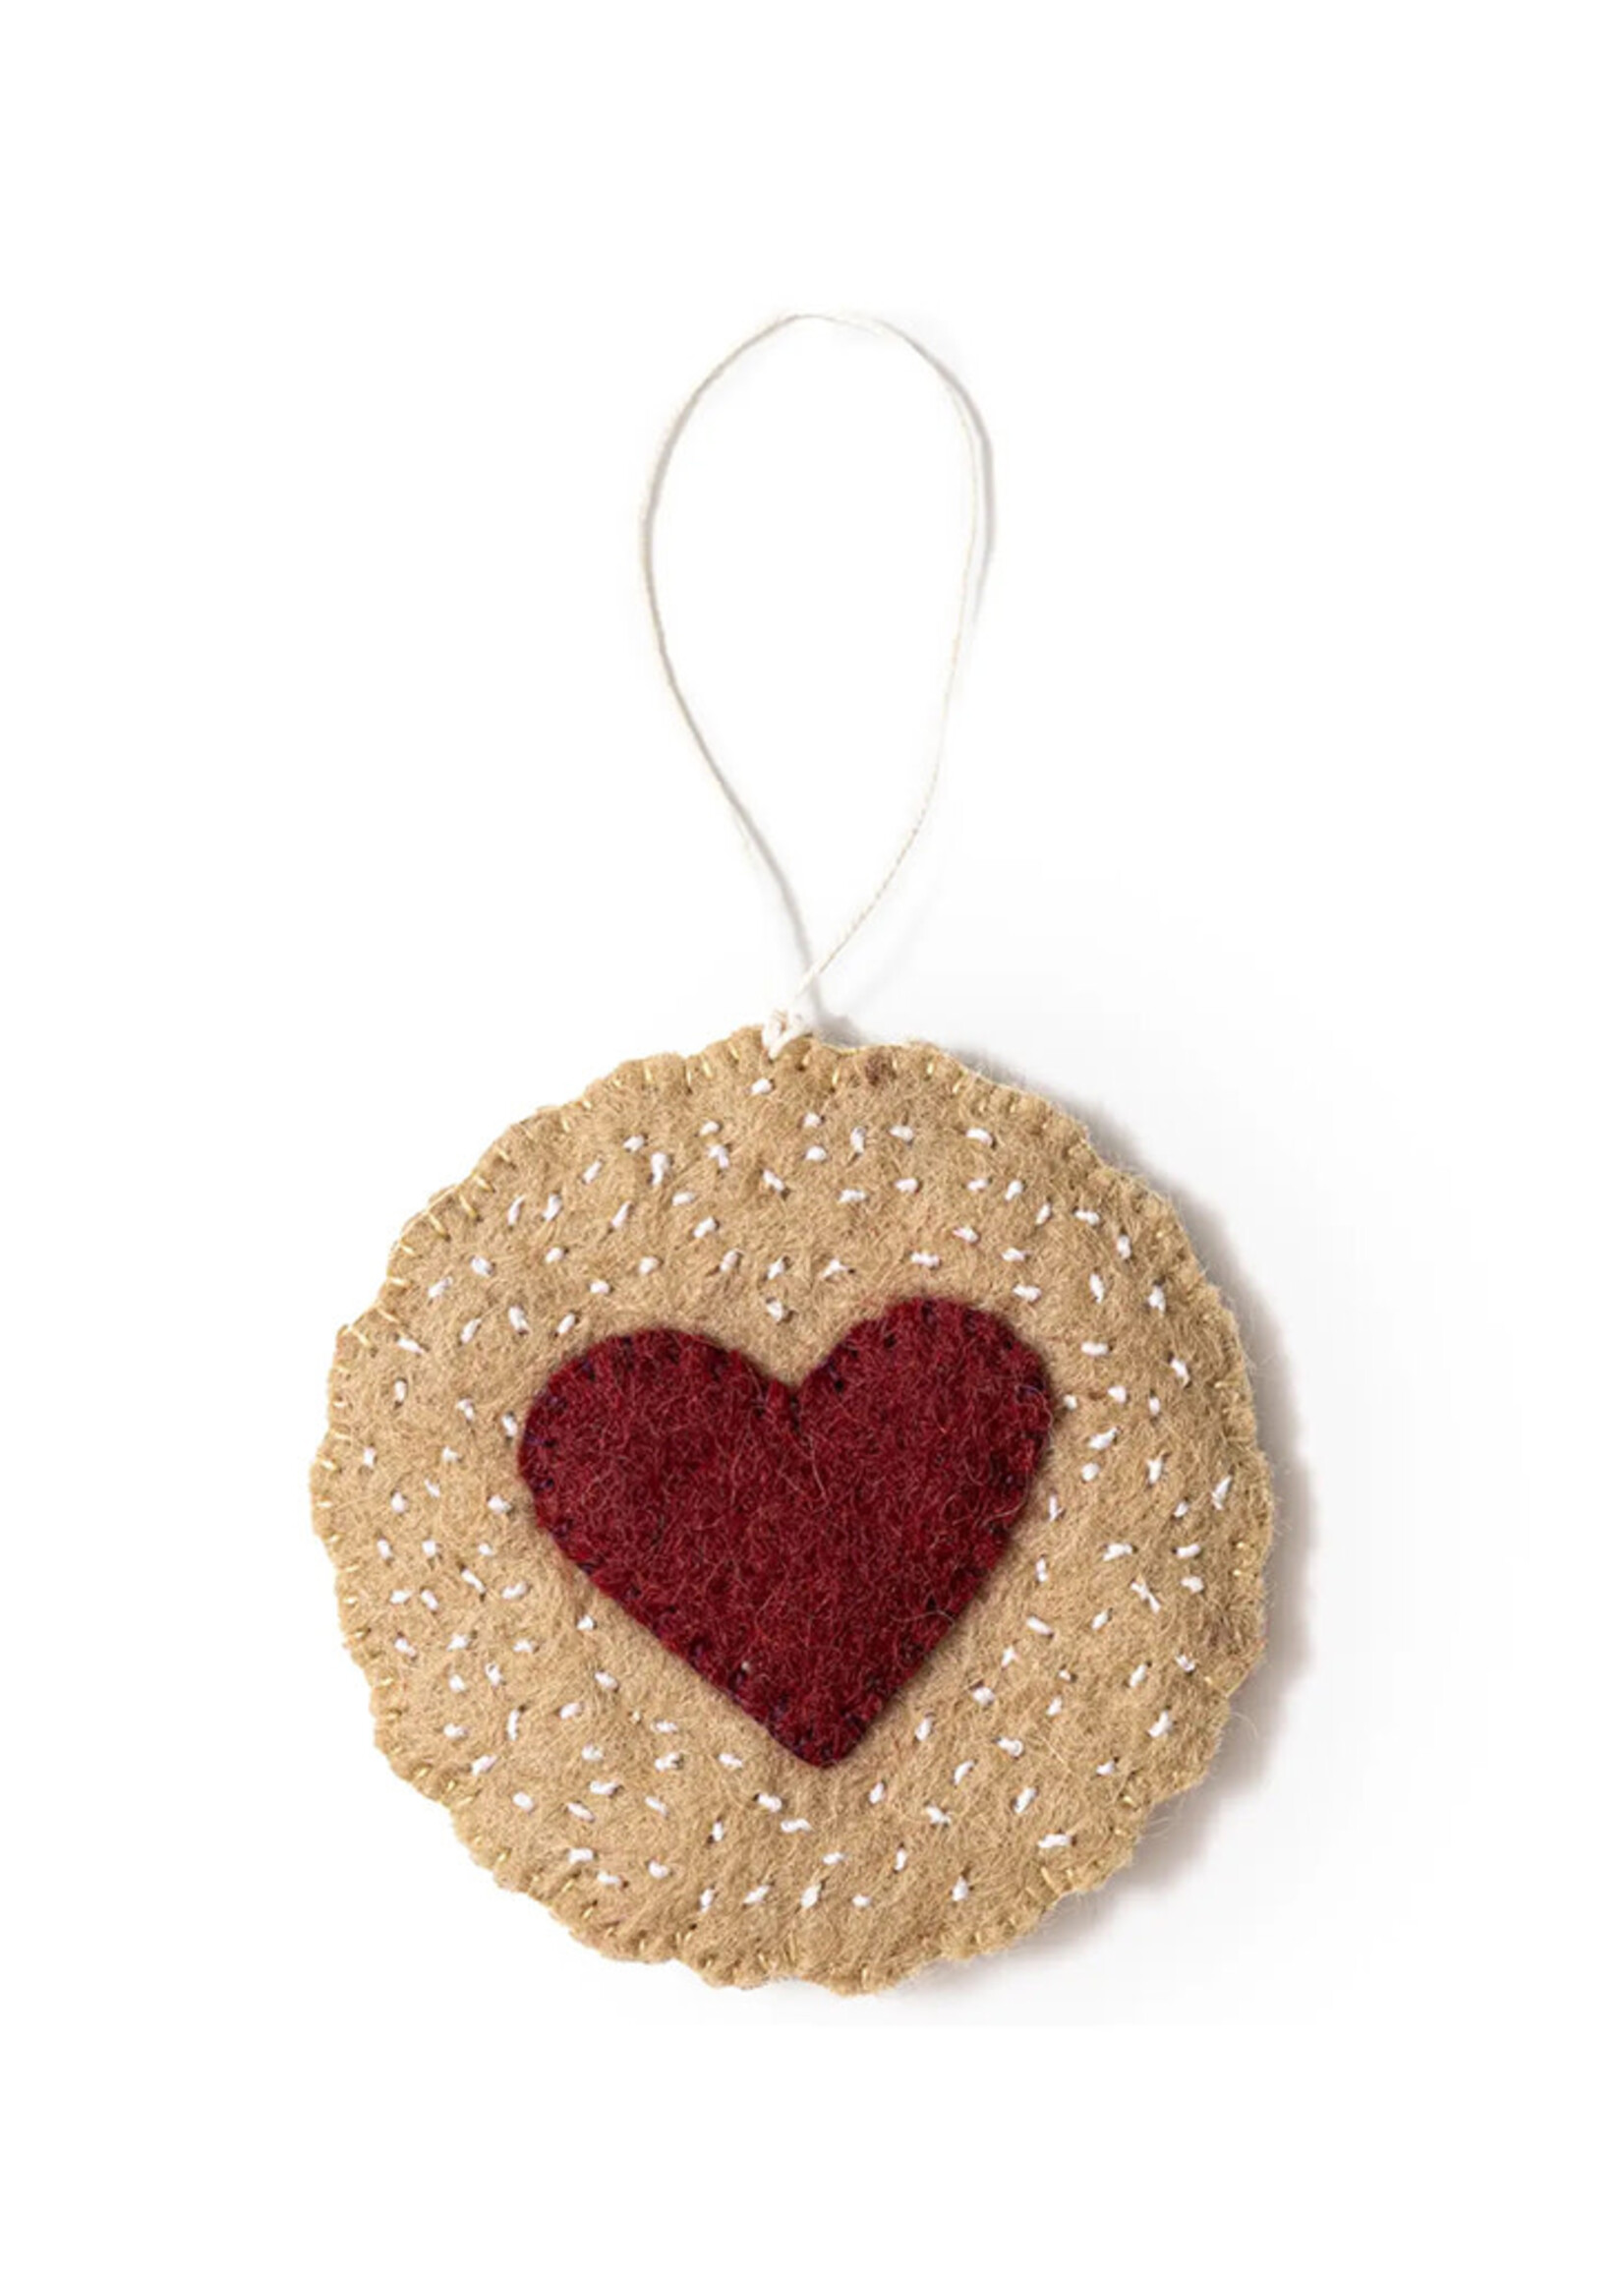 Global Goods Partners Felt Linzer Cookie Ornament